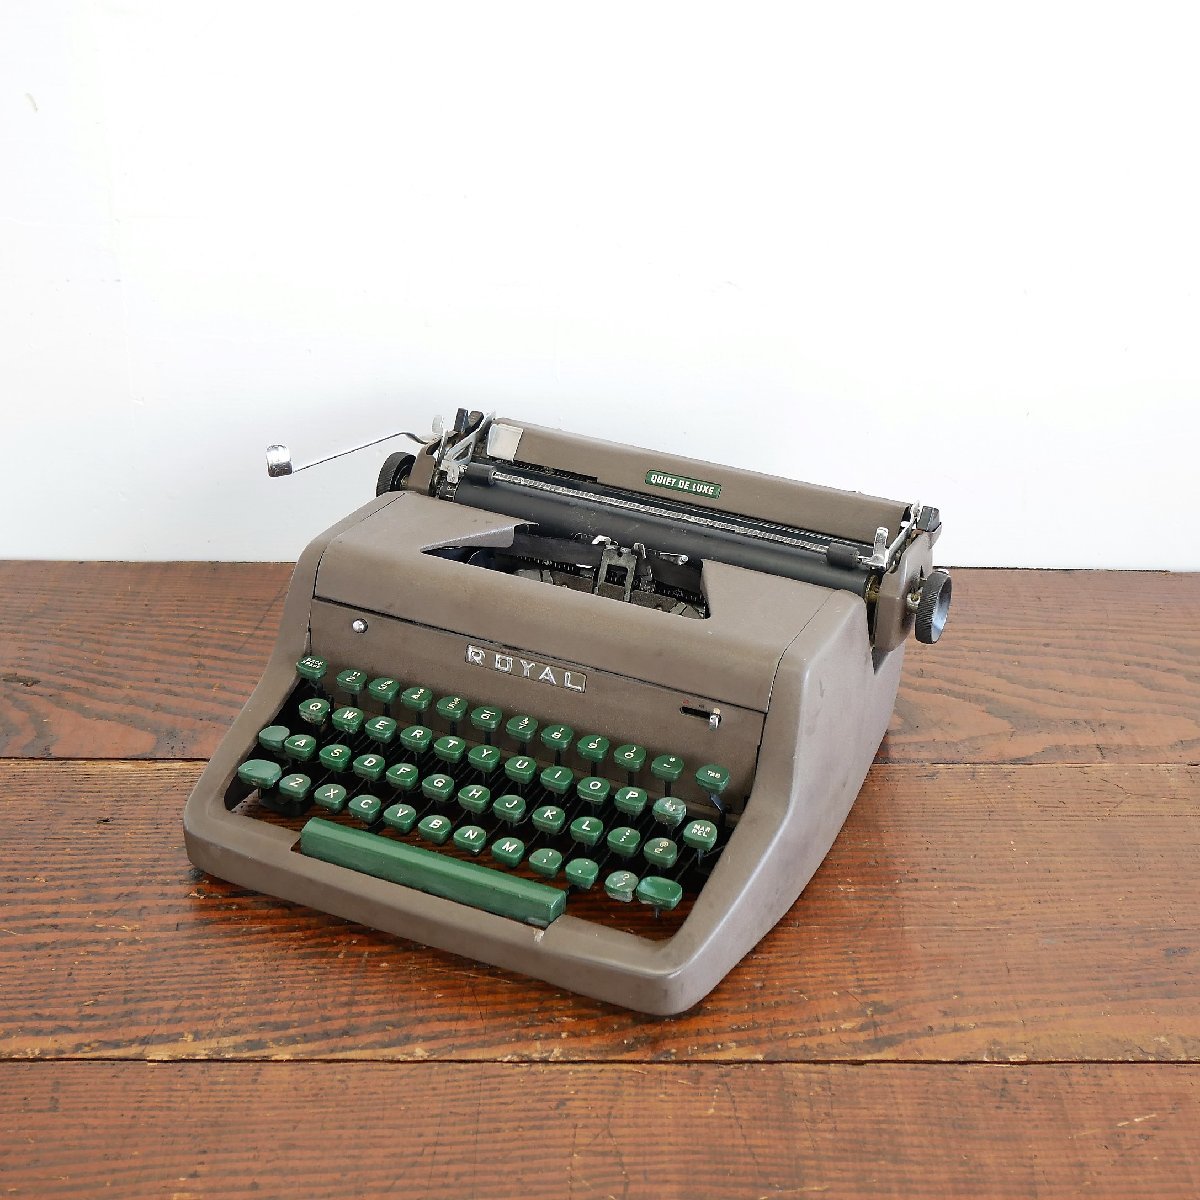 1950s アンティーク タイプライター【#4349】ROYAL ロイヤル タイプライター カンパニー グリーンキー アメリカ オフィス雑貨